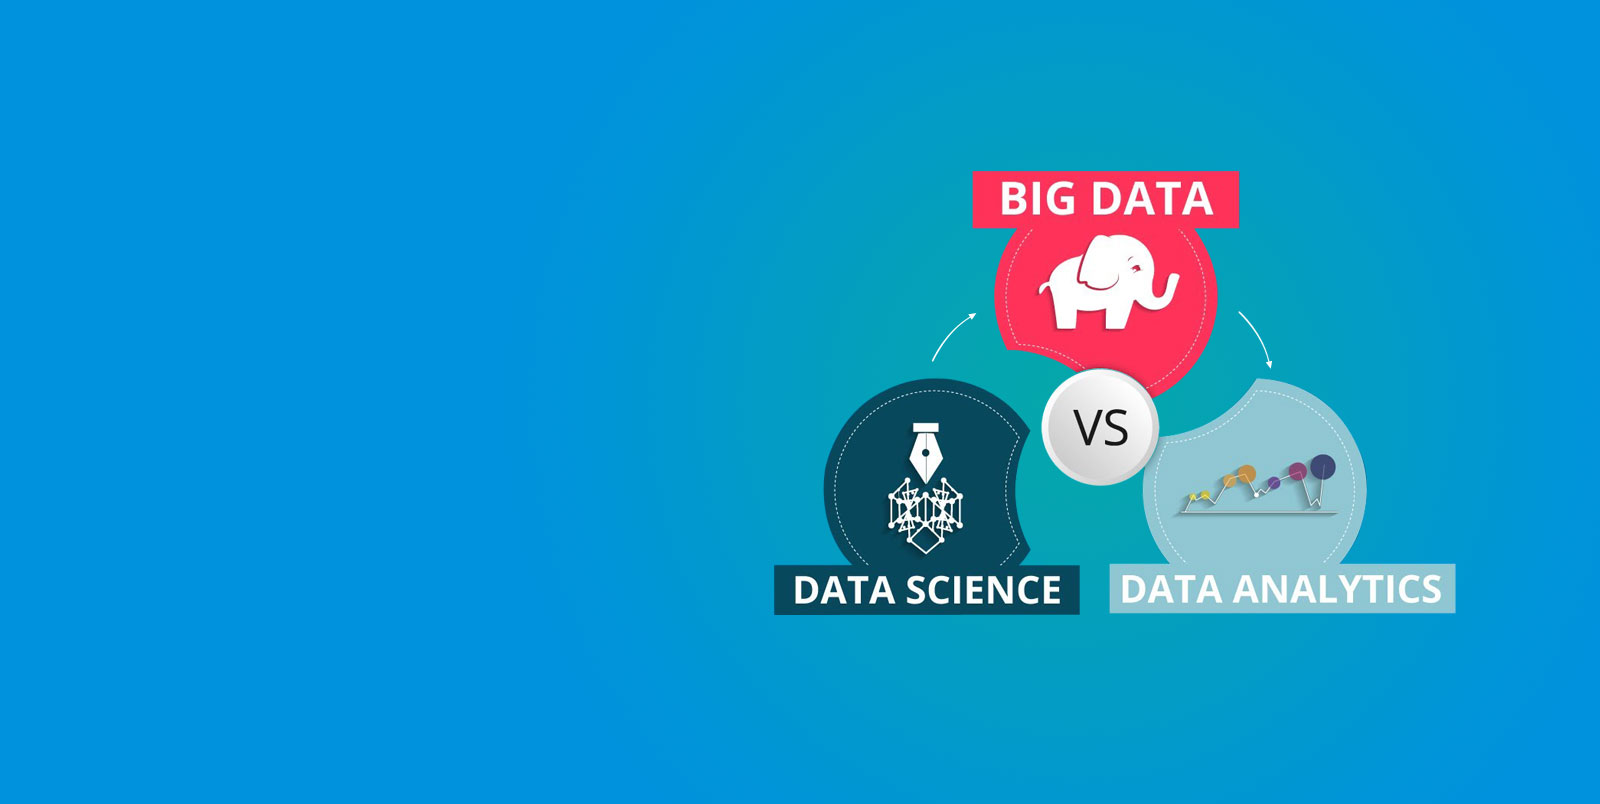 Big Data Vs Data Science Vs Data Analytics: A Detailed Comparison